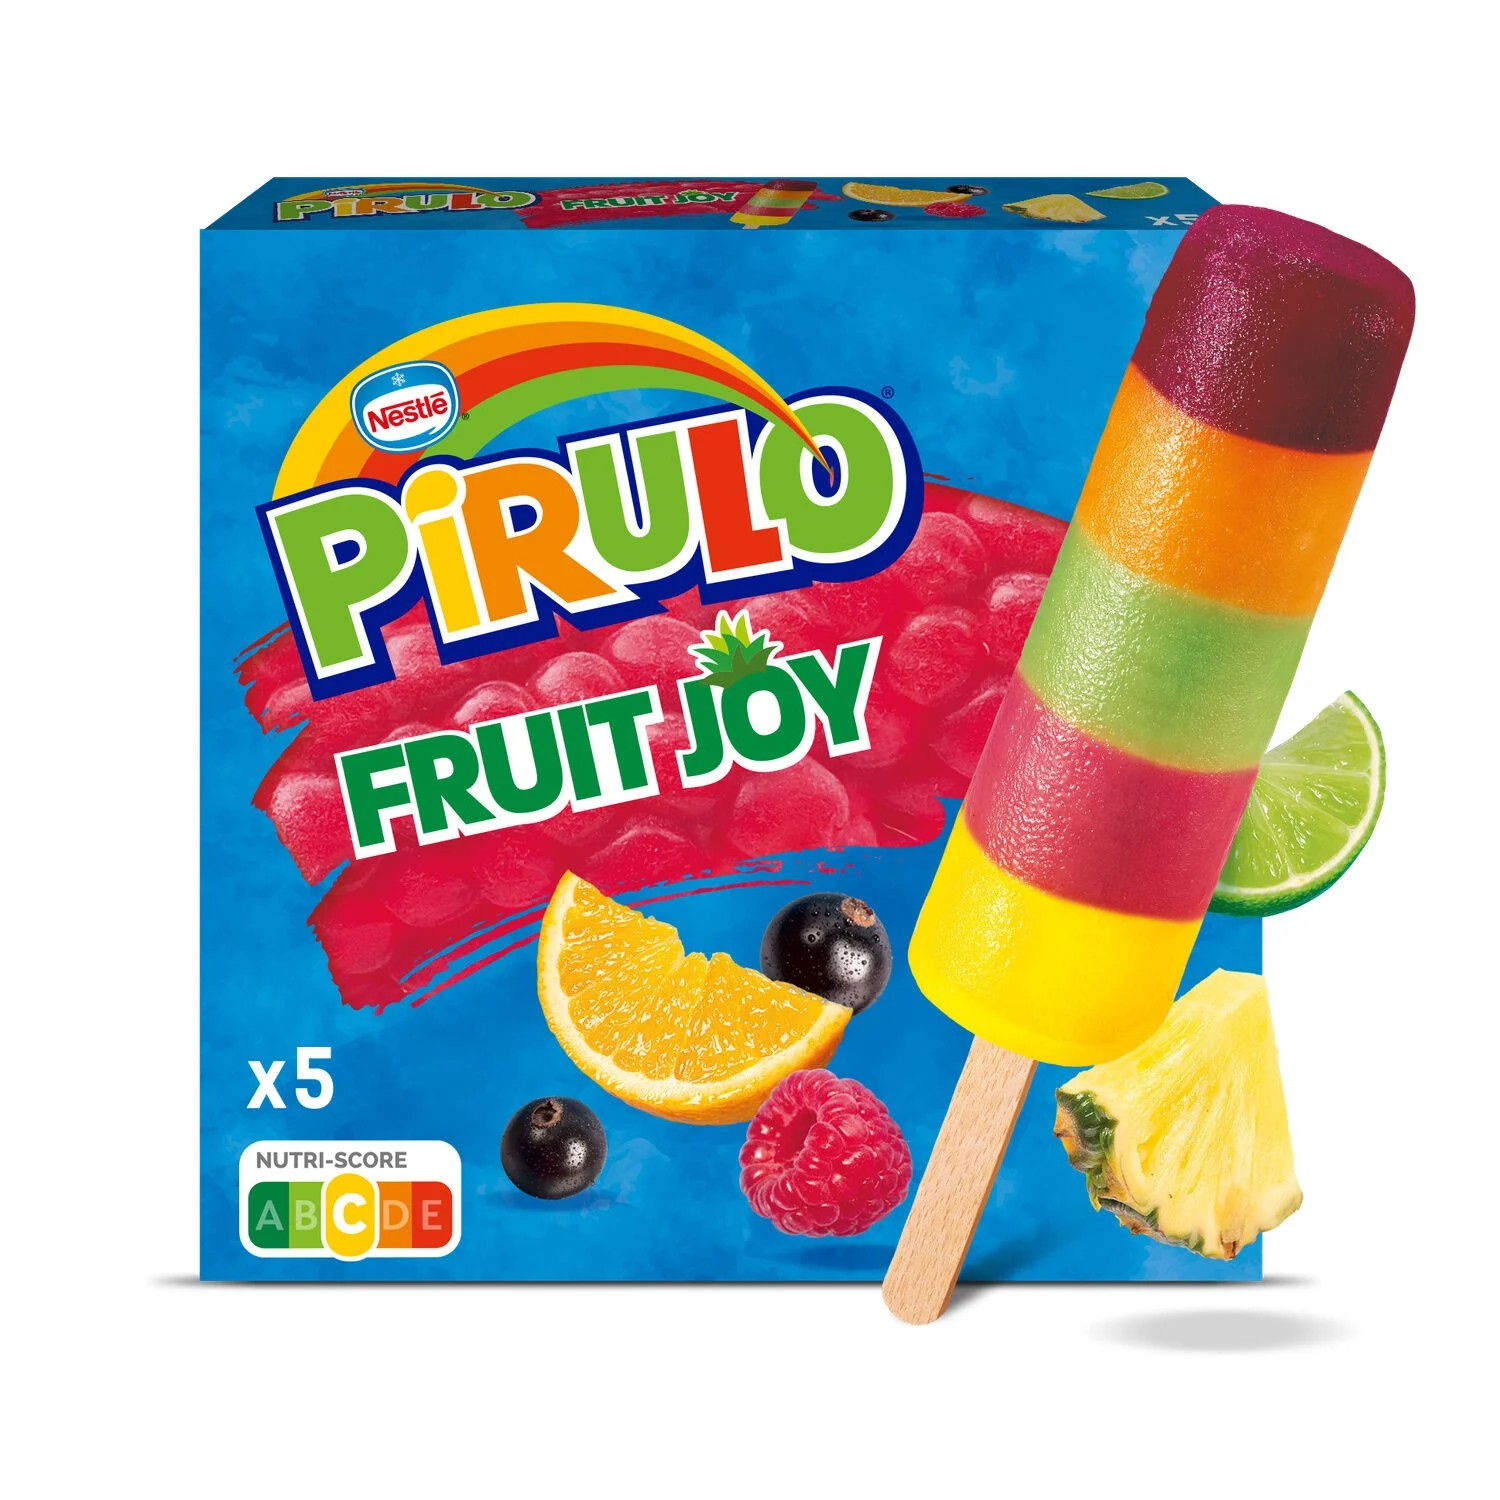 325g Pirulo Fruit Joy X5